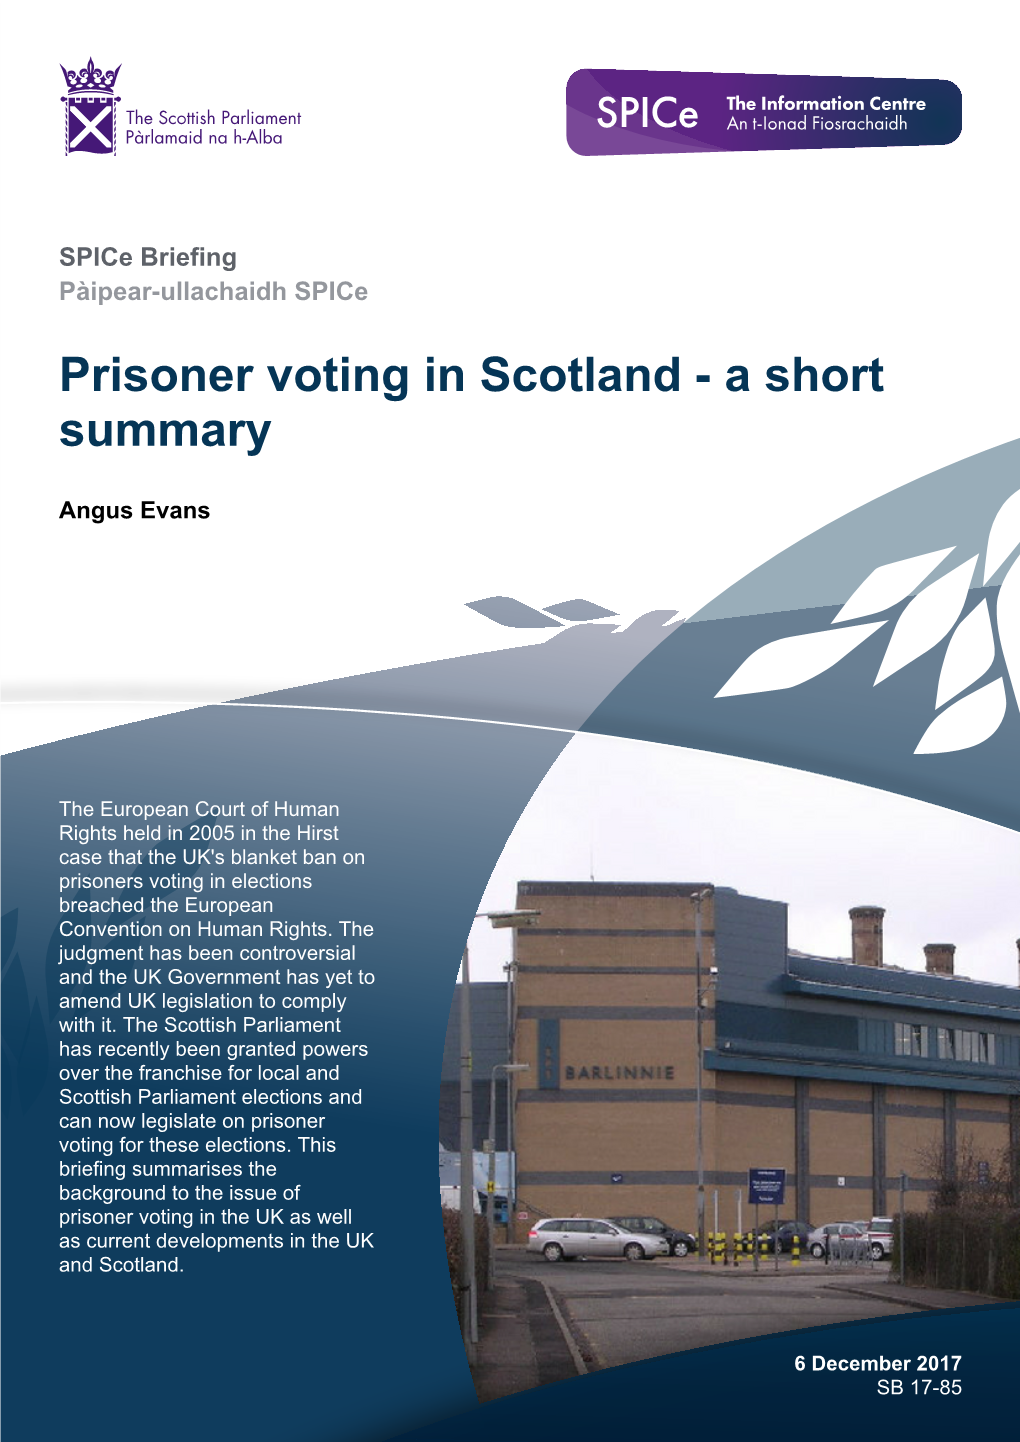 Prisoner Voting in Scotland - a Short Summary